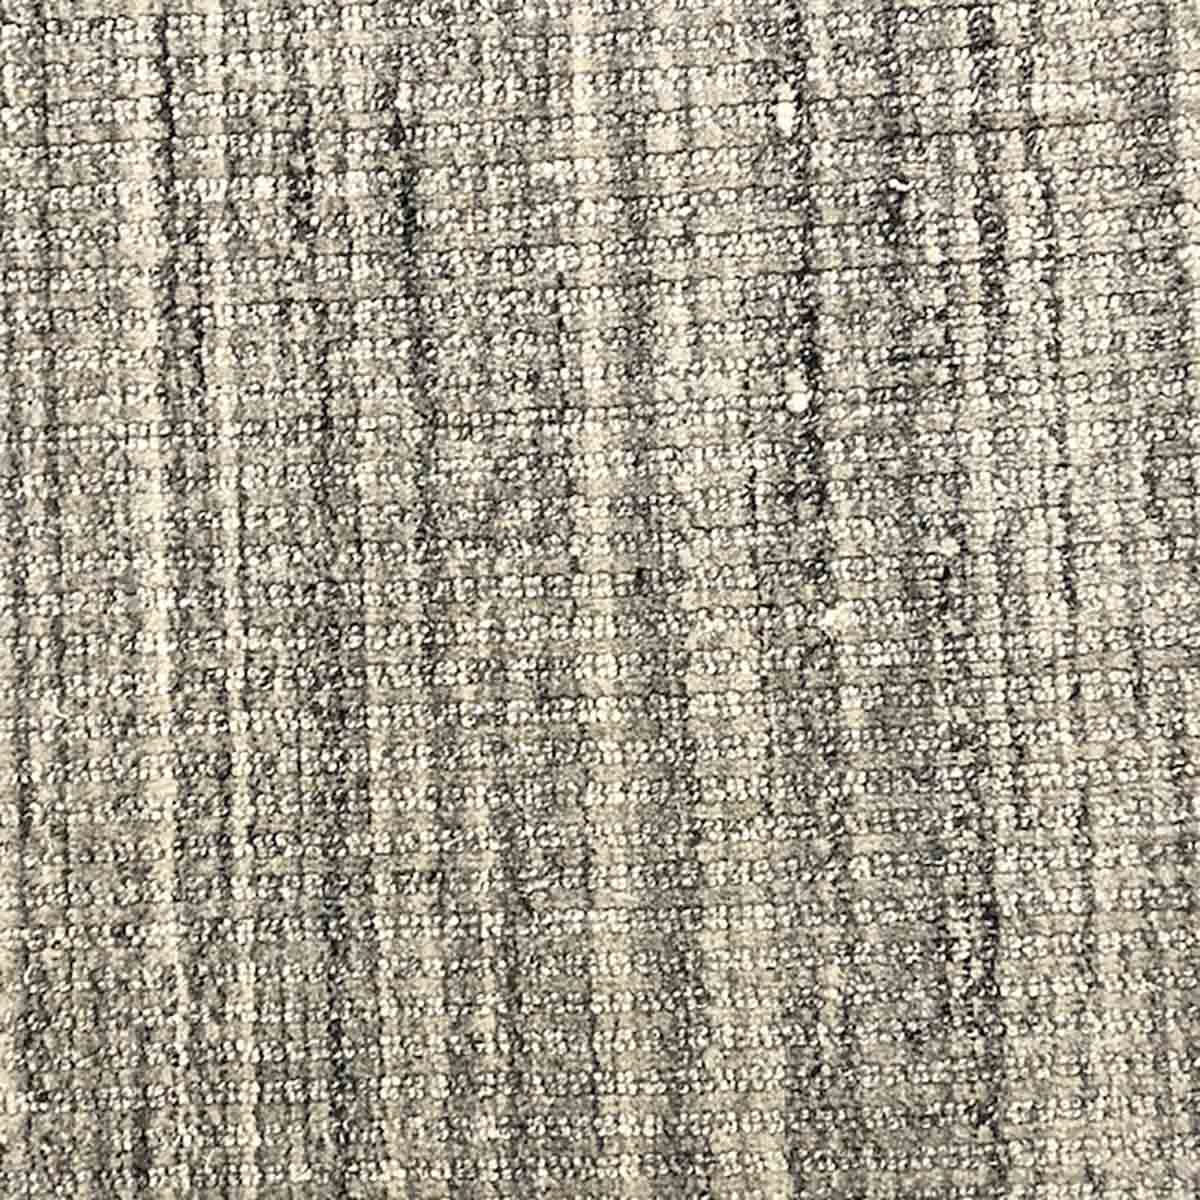 vero grey handmade area rug